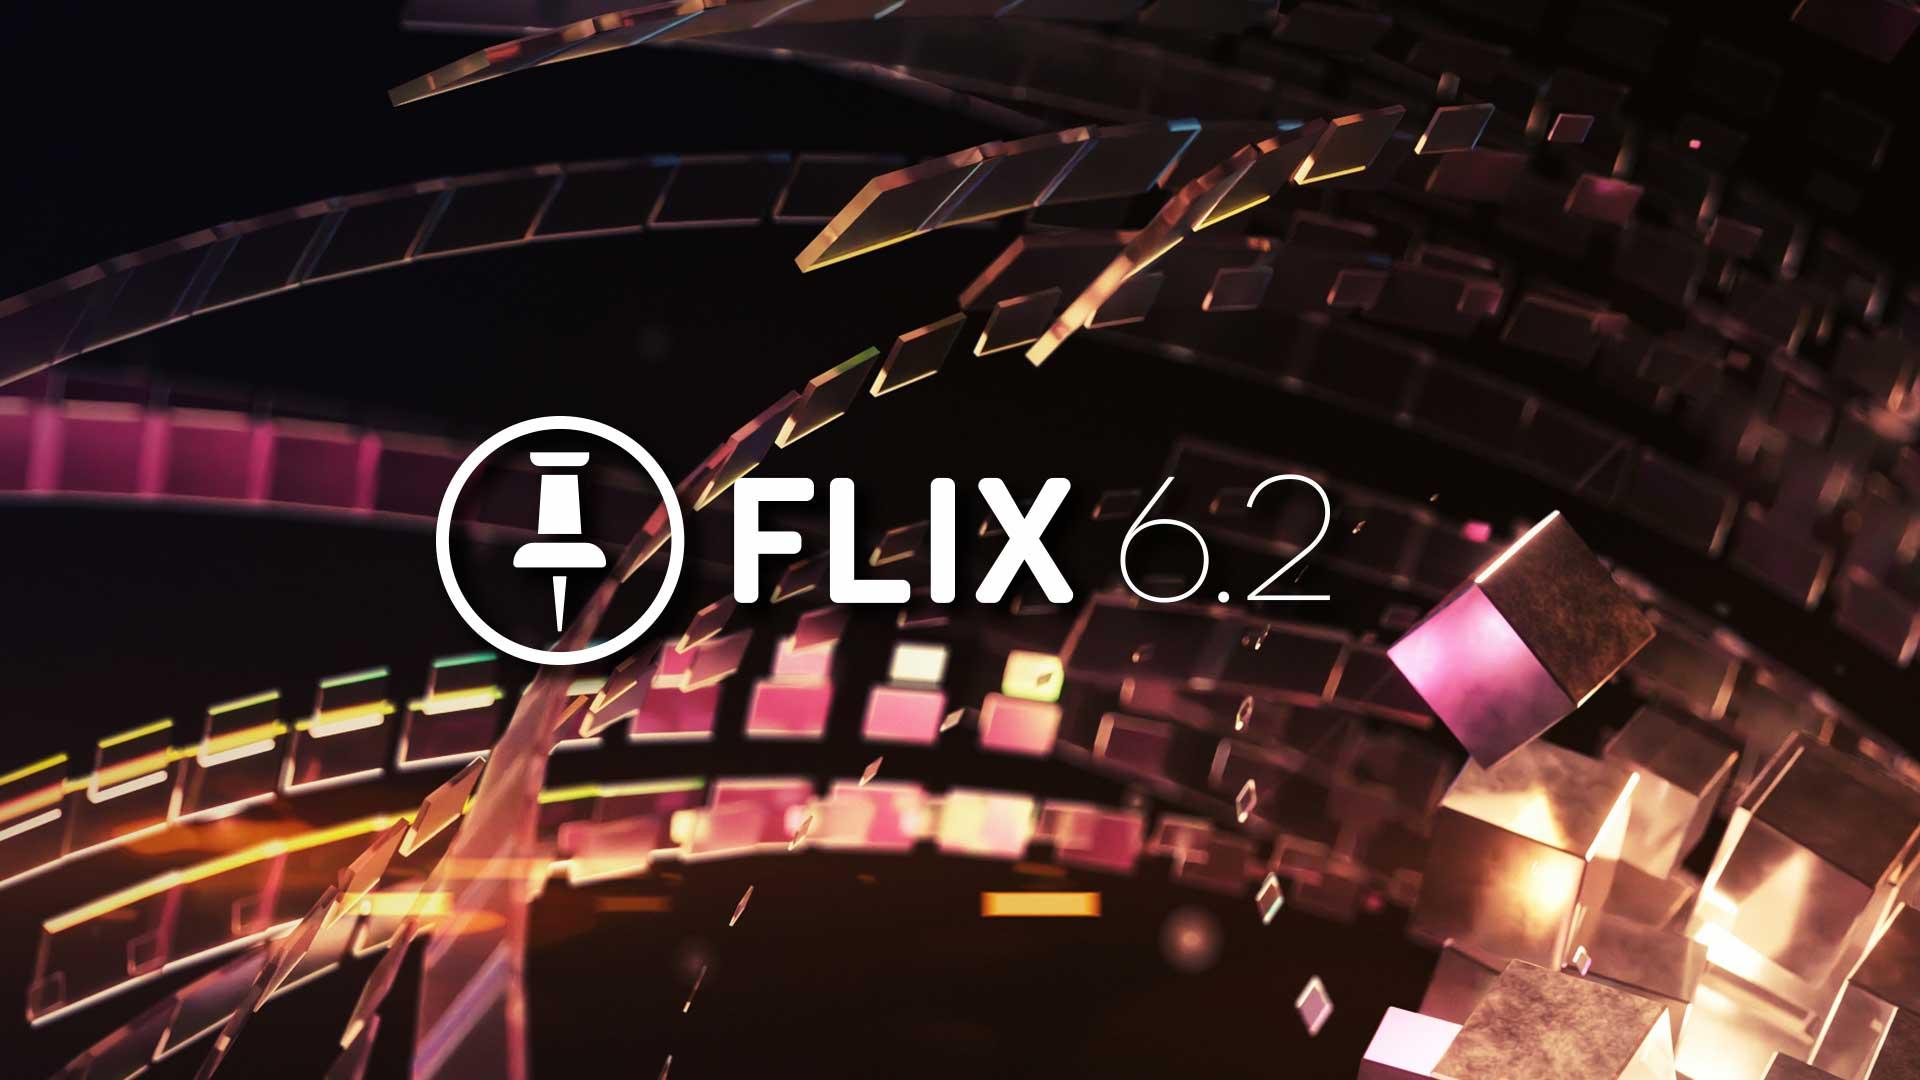 Flix 6.2 release